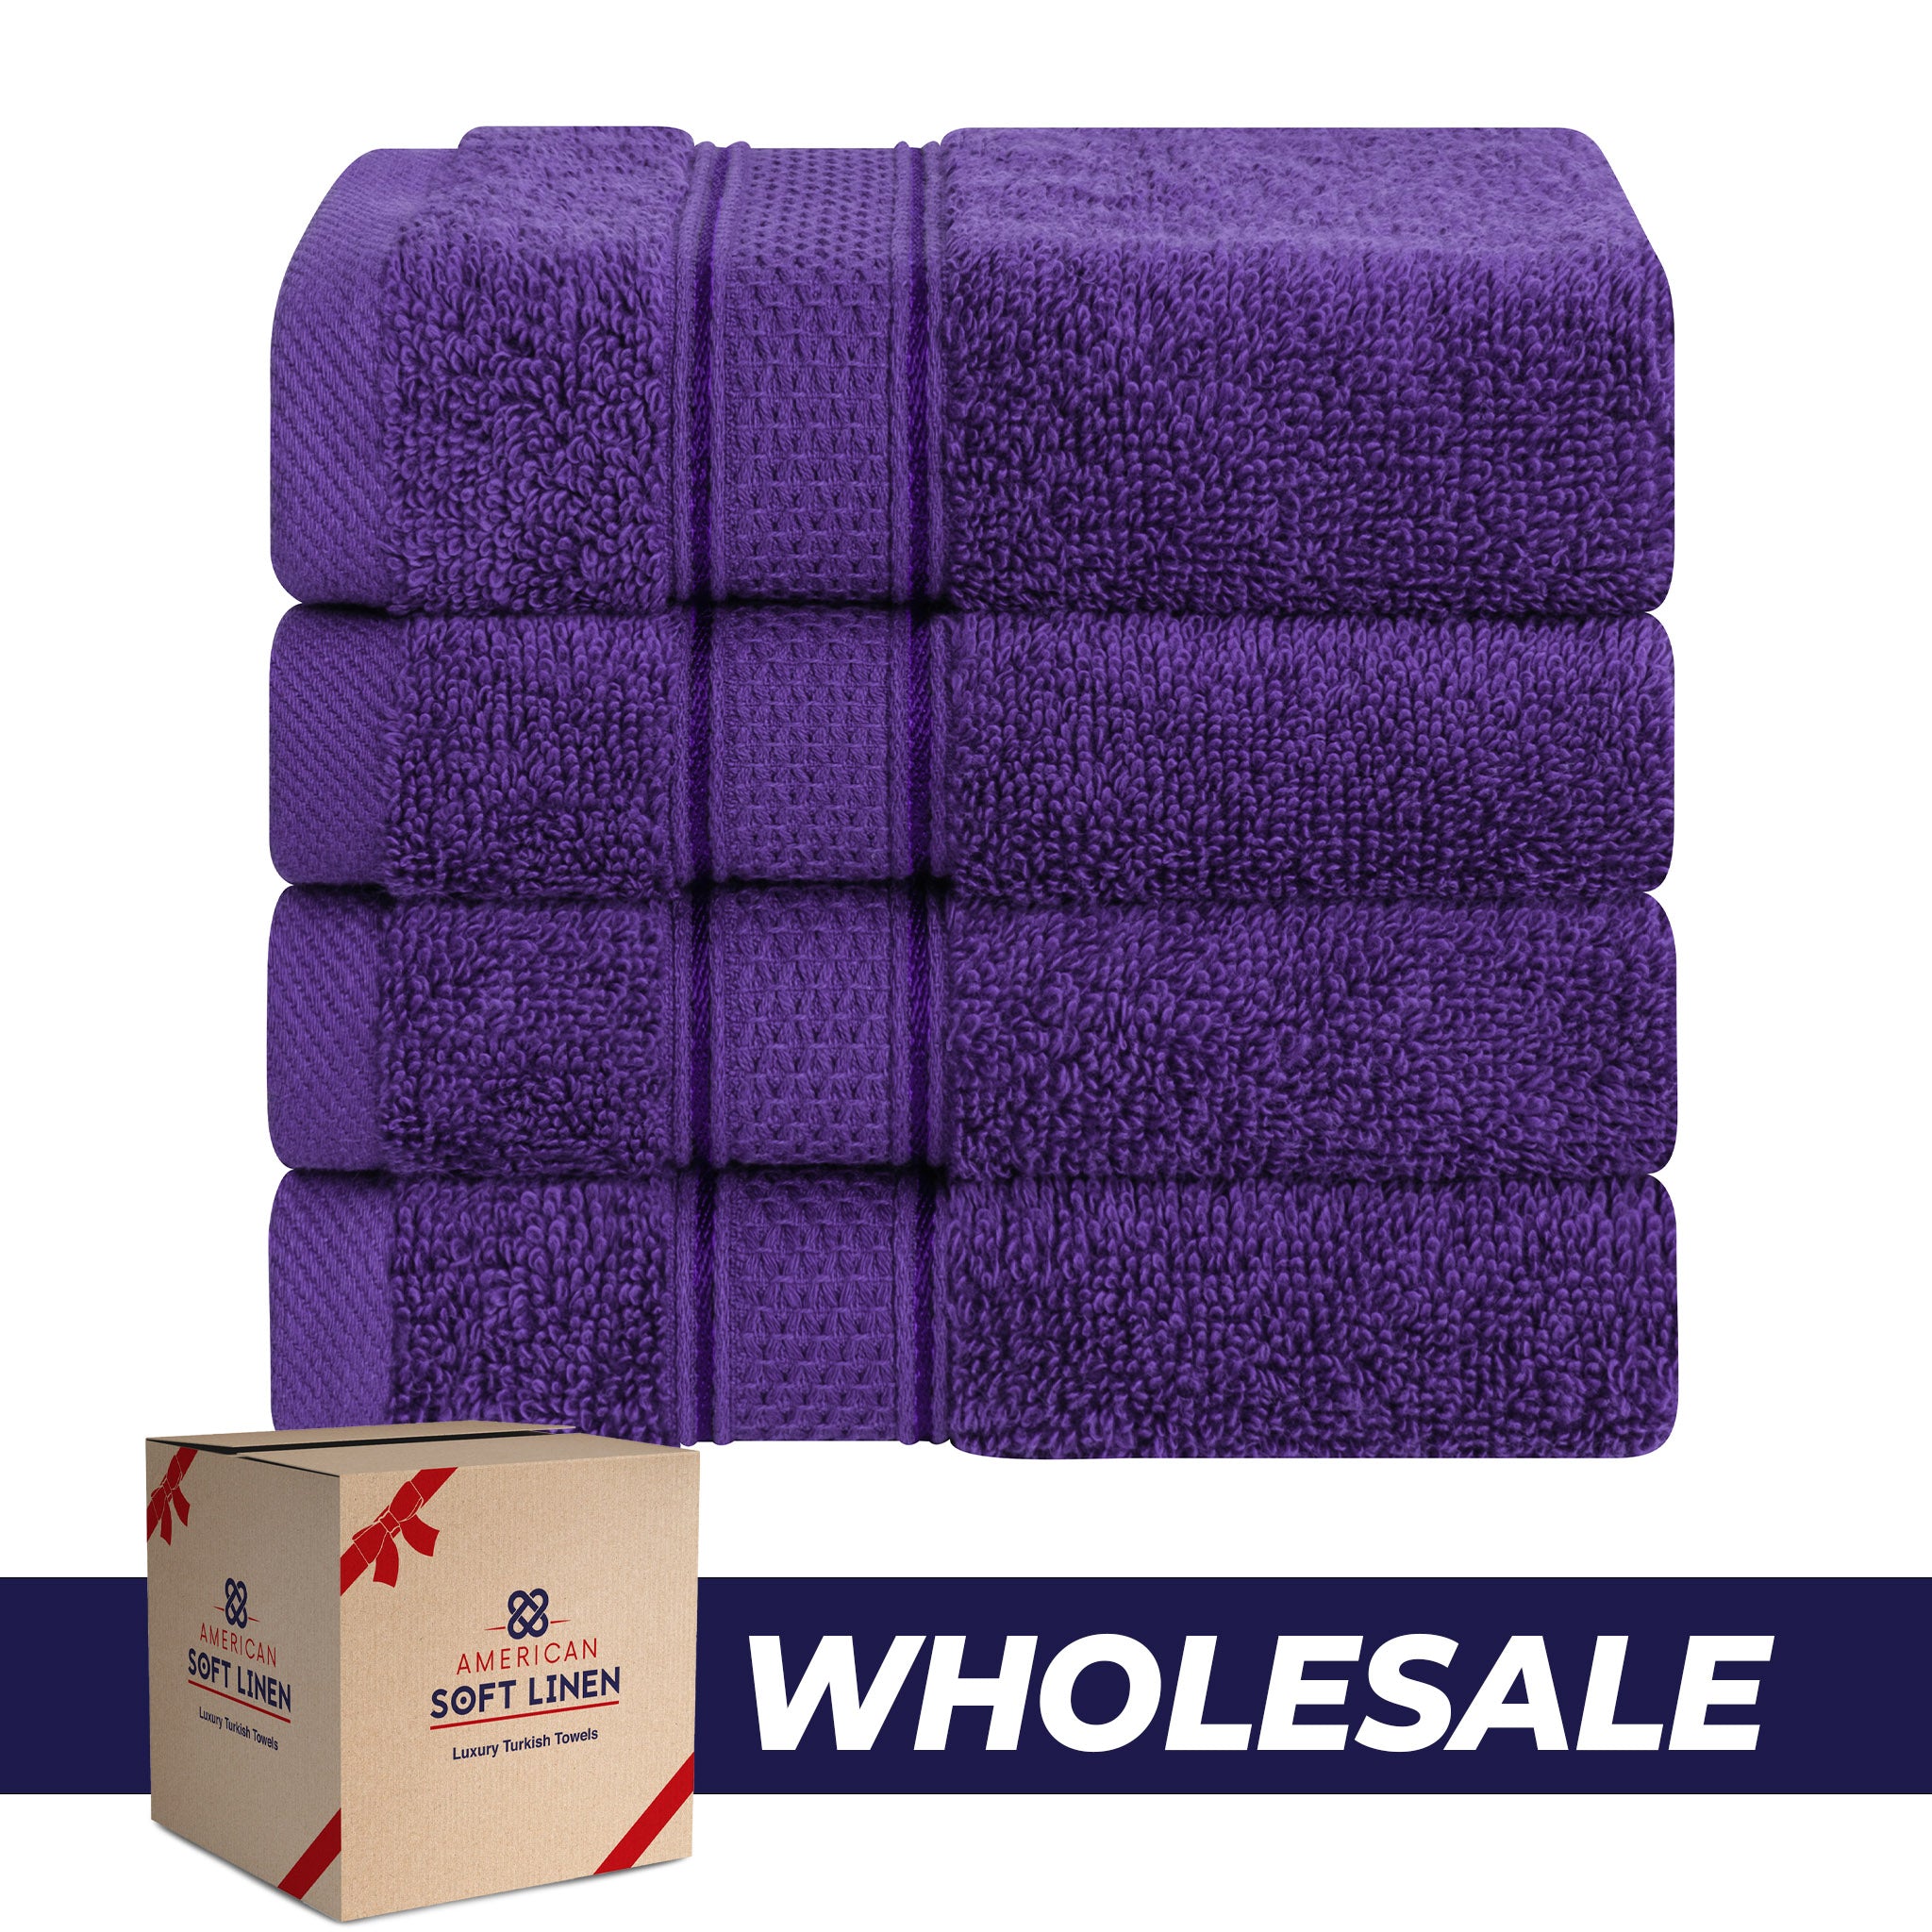 4 Pack Washcloth Towel Set 100% Turkish Combed Cotton - 60 Set Case Pack